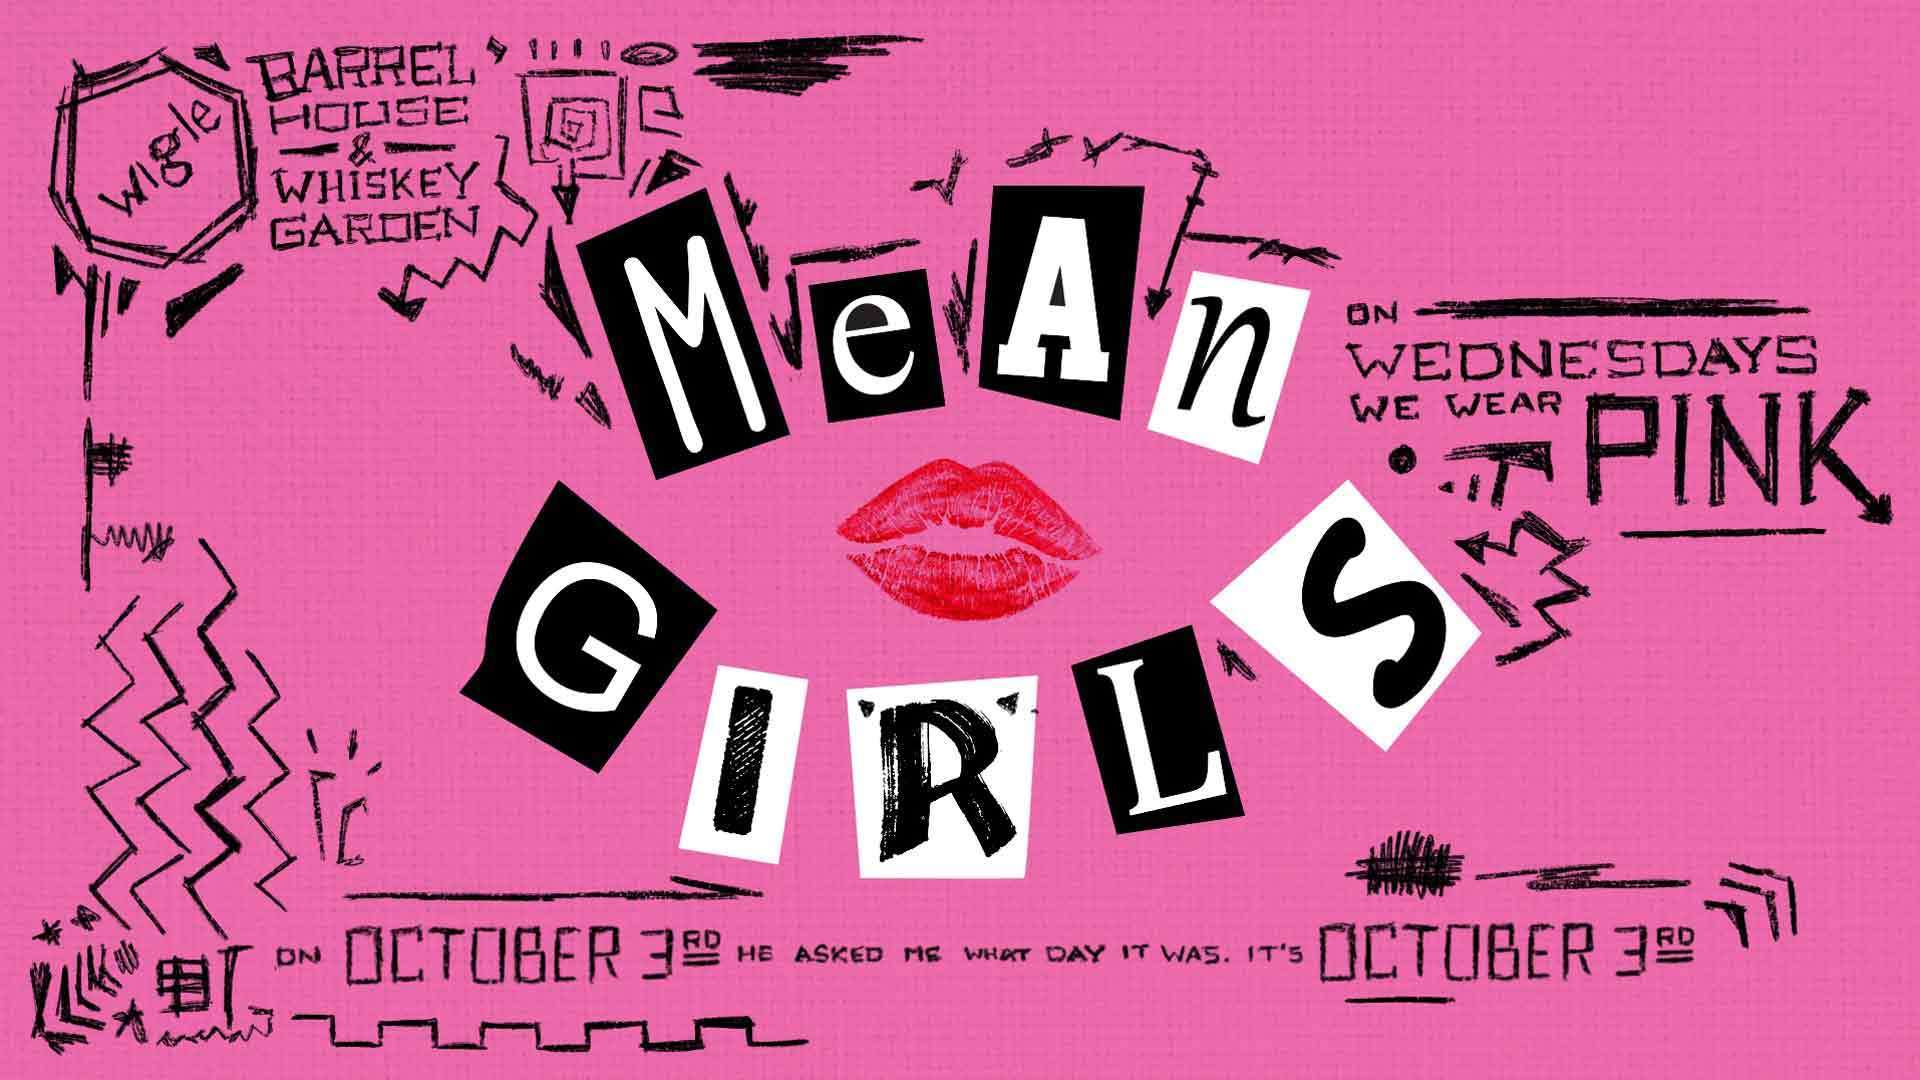 Mean Girls Logo